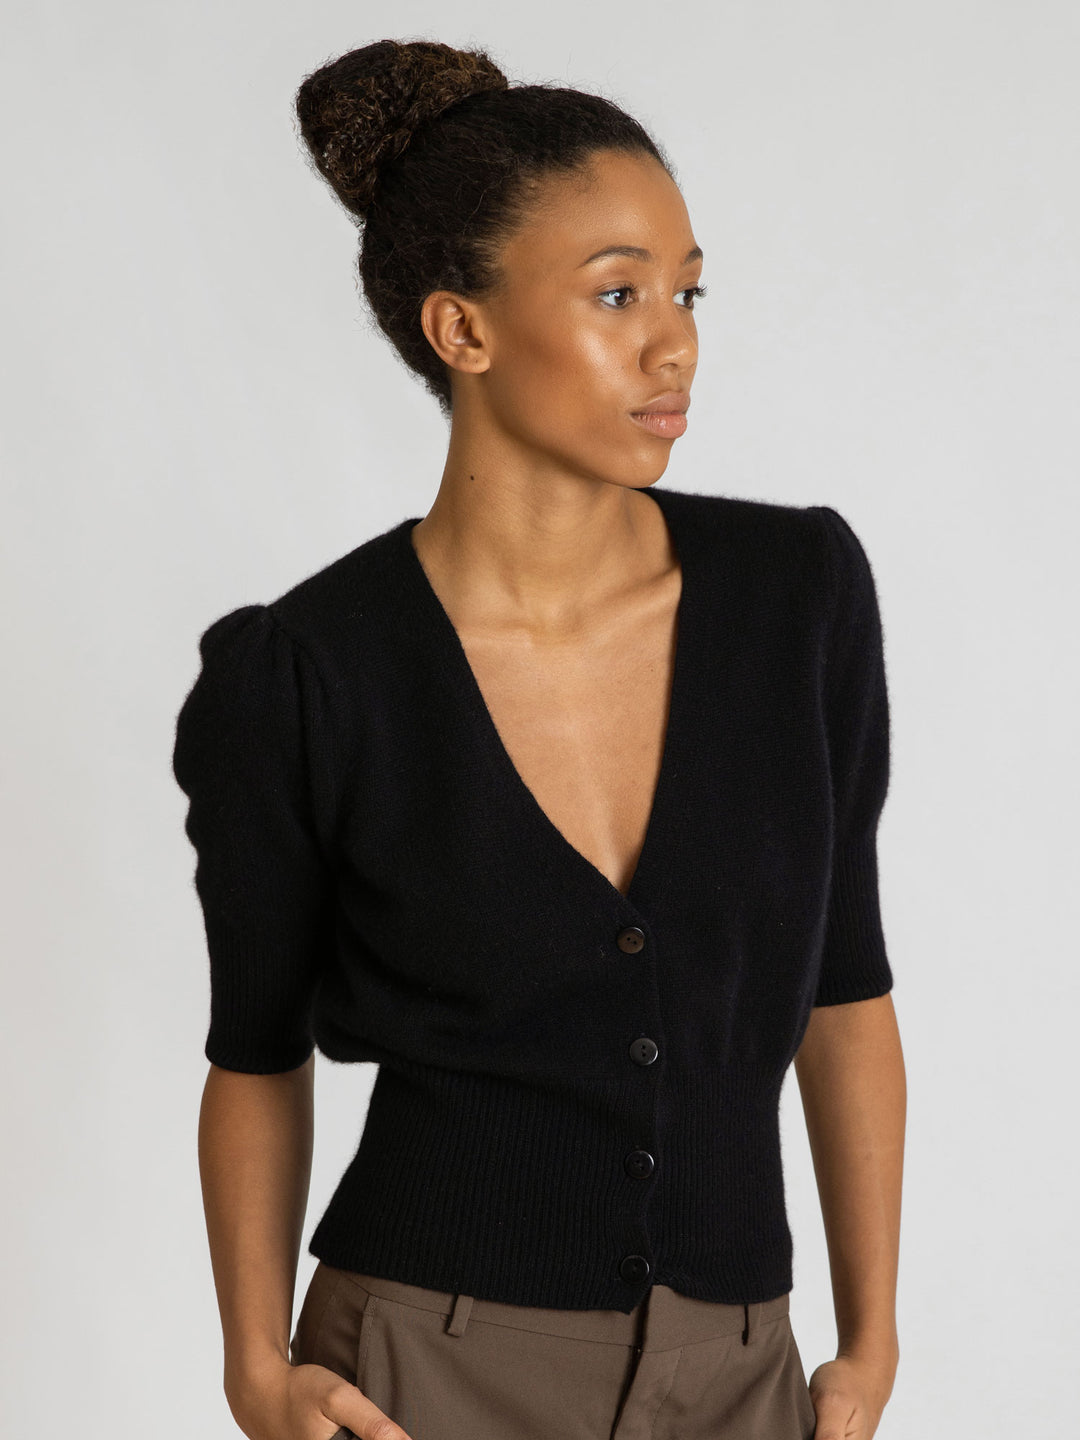 Short sleeved. cashmere cardigan grace in 100% pure cashmere by Kashmina. Scandinavian design. Color: Black